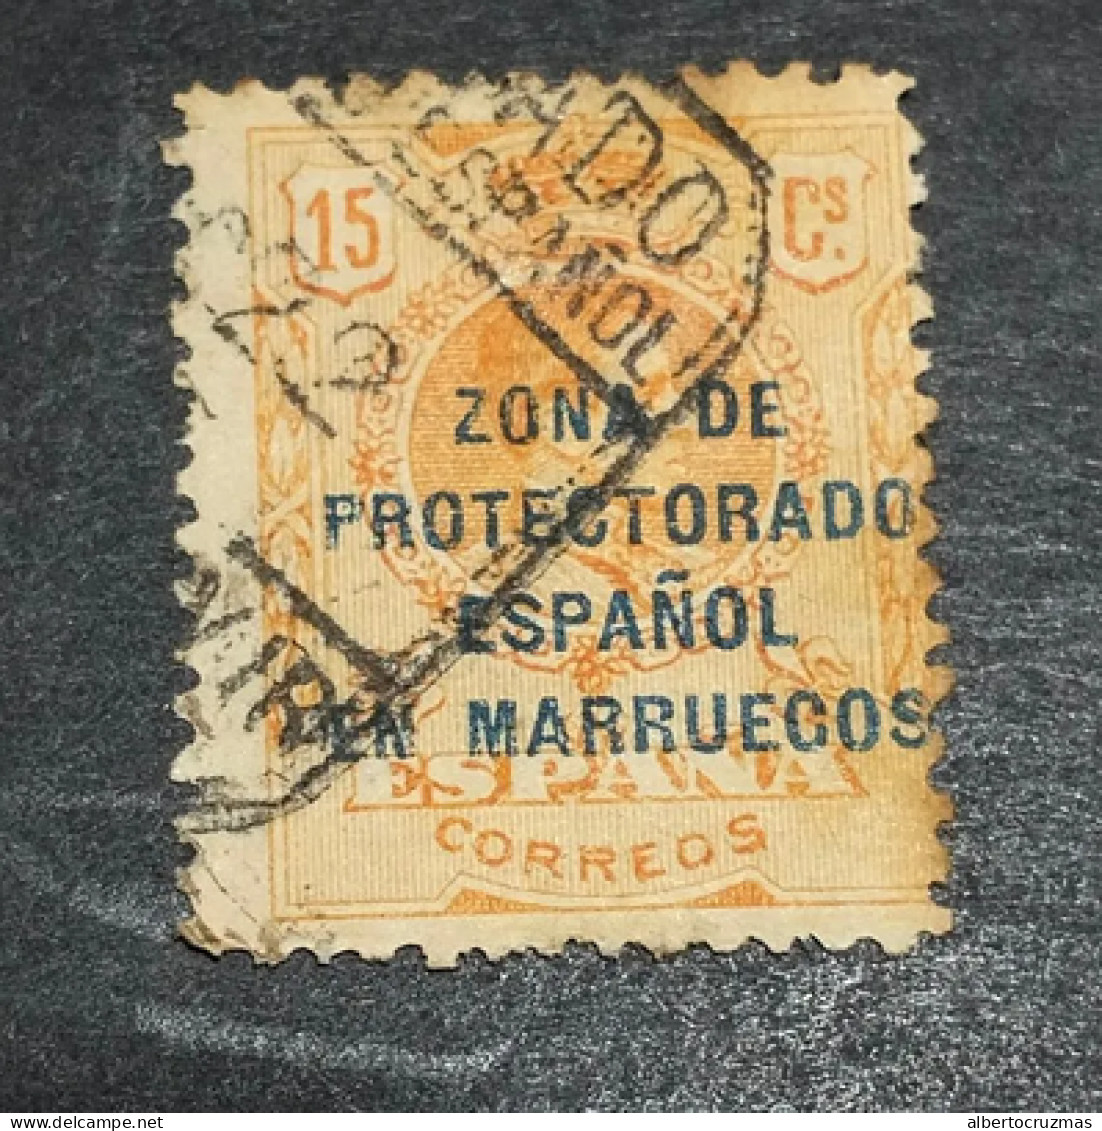 ESPAÑA SELLOS MARRUECOS EDIFIL 61 AÑO 1929 SELLOS CALIDAD USADO - Spanish Morocco